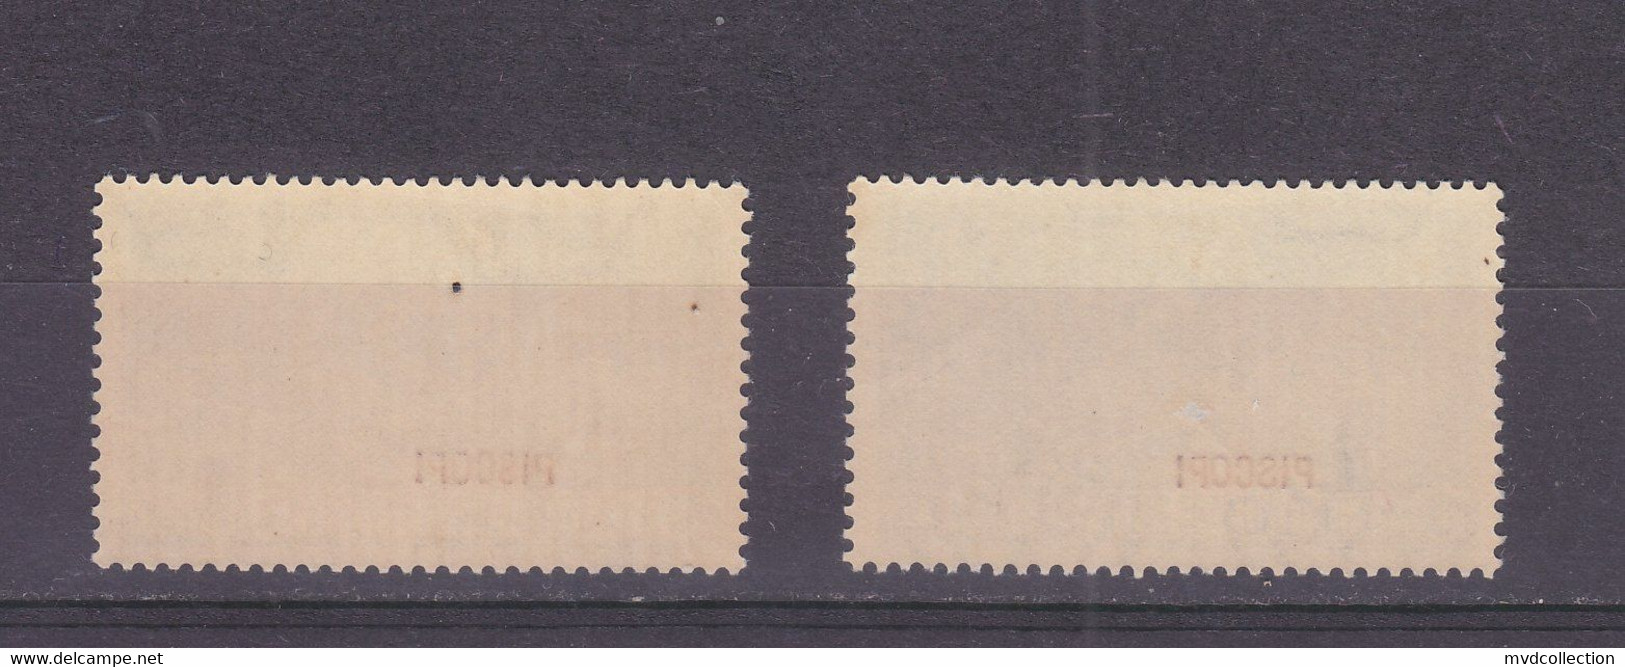 ITALY Lot CENTENARIO FERRUCCI Stamps Overprinted PISCOPI 1930 VF MH Original Gum - Egée (Piscopi)